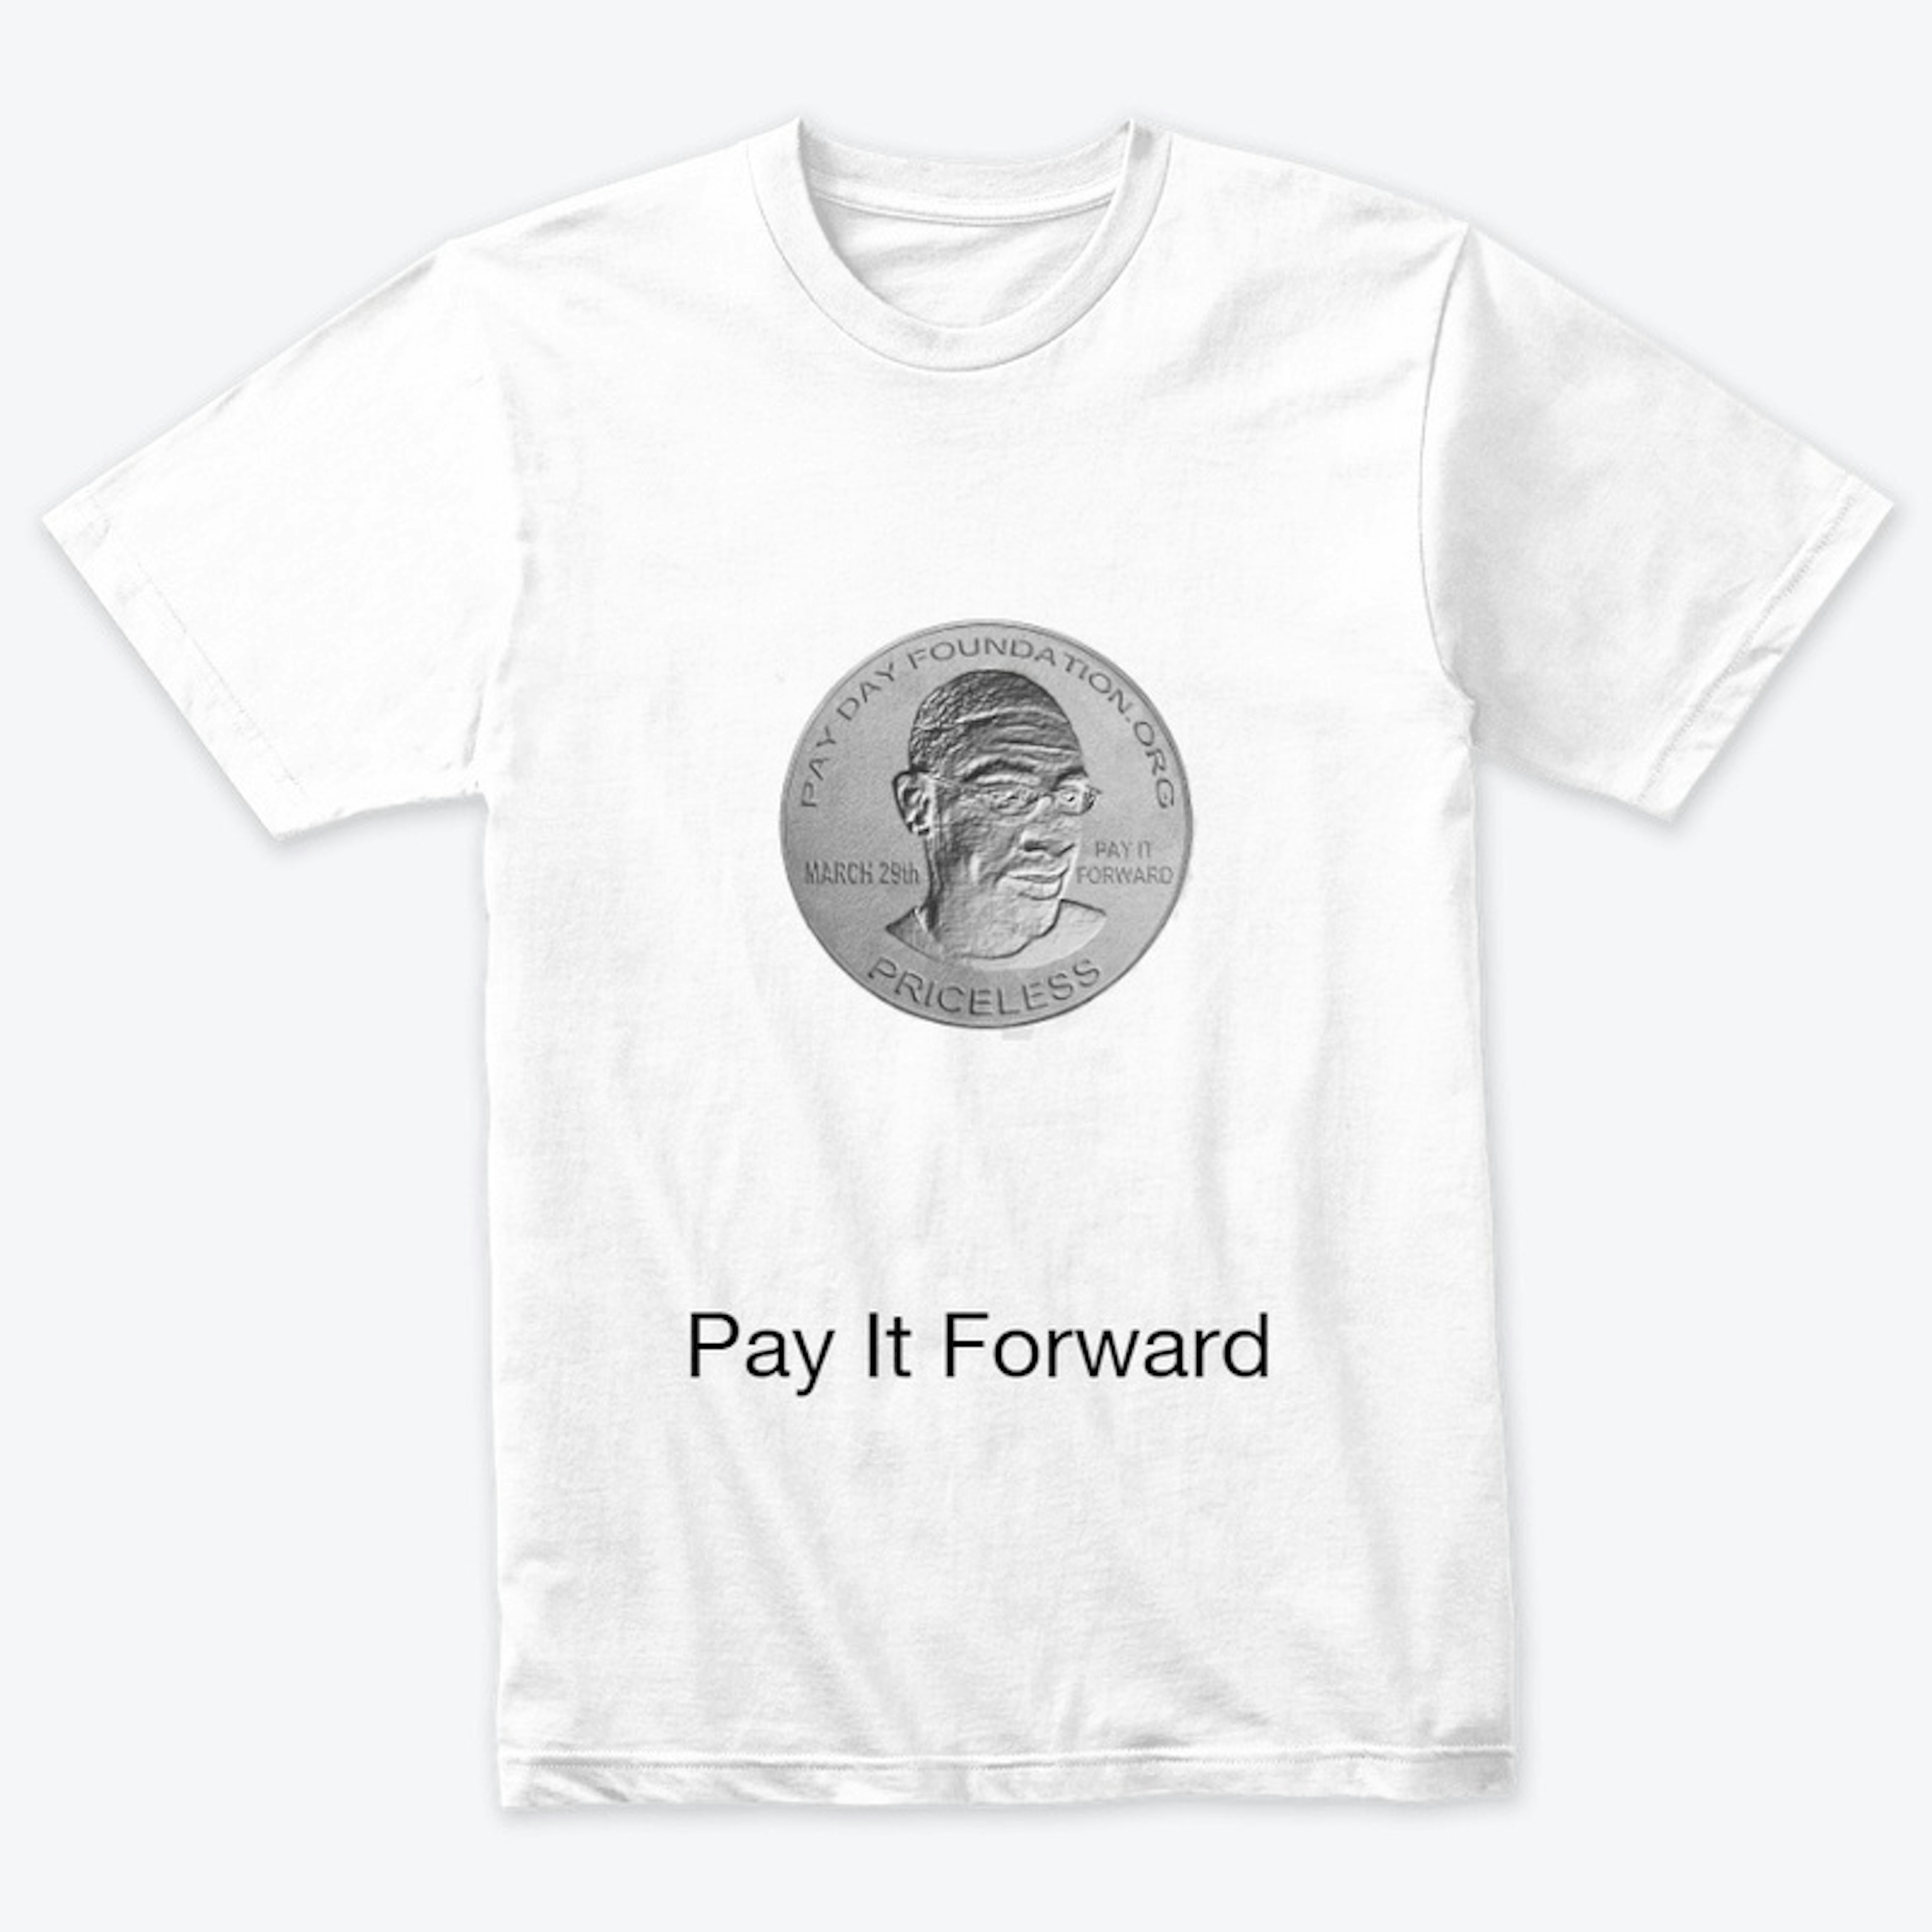 PayDay Foundation